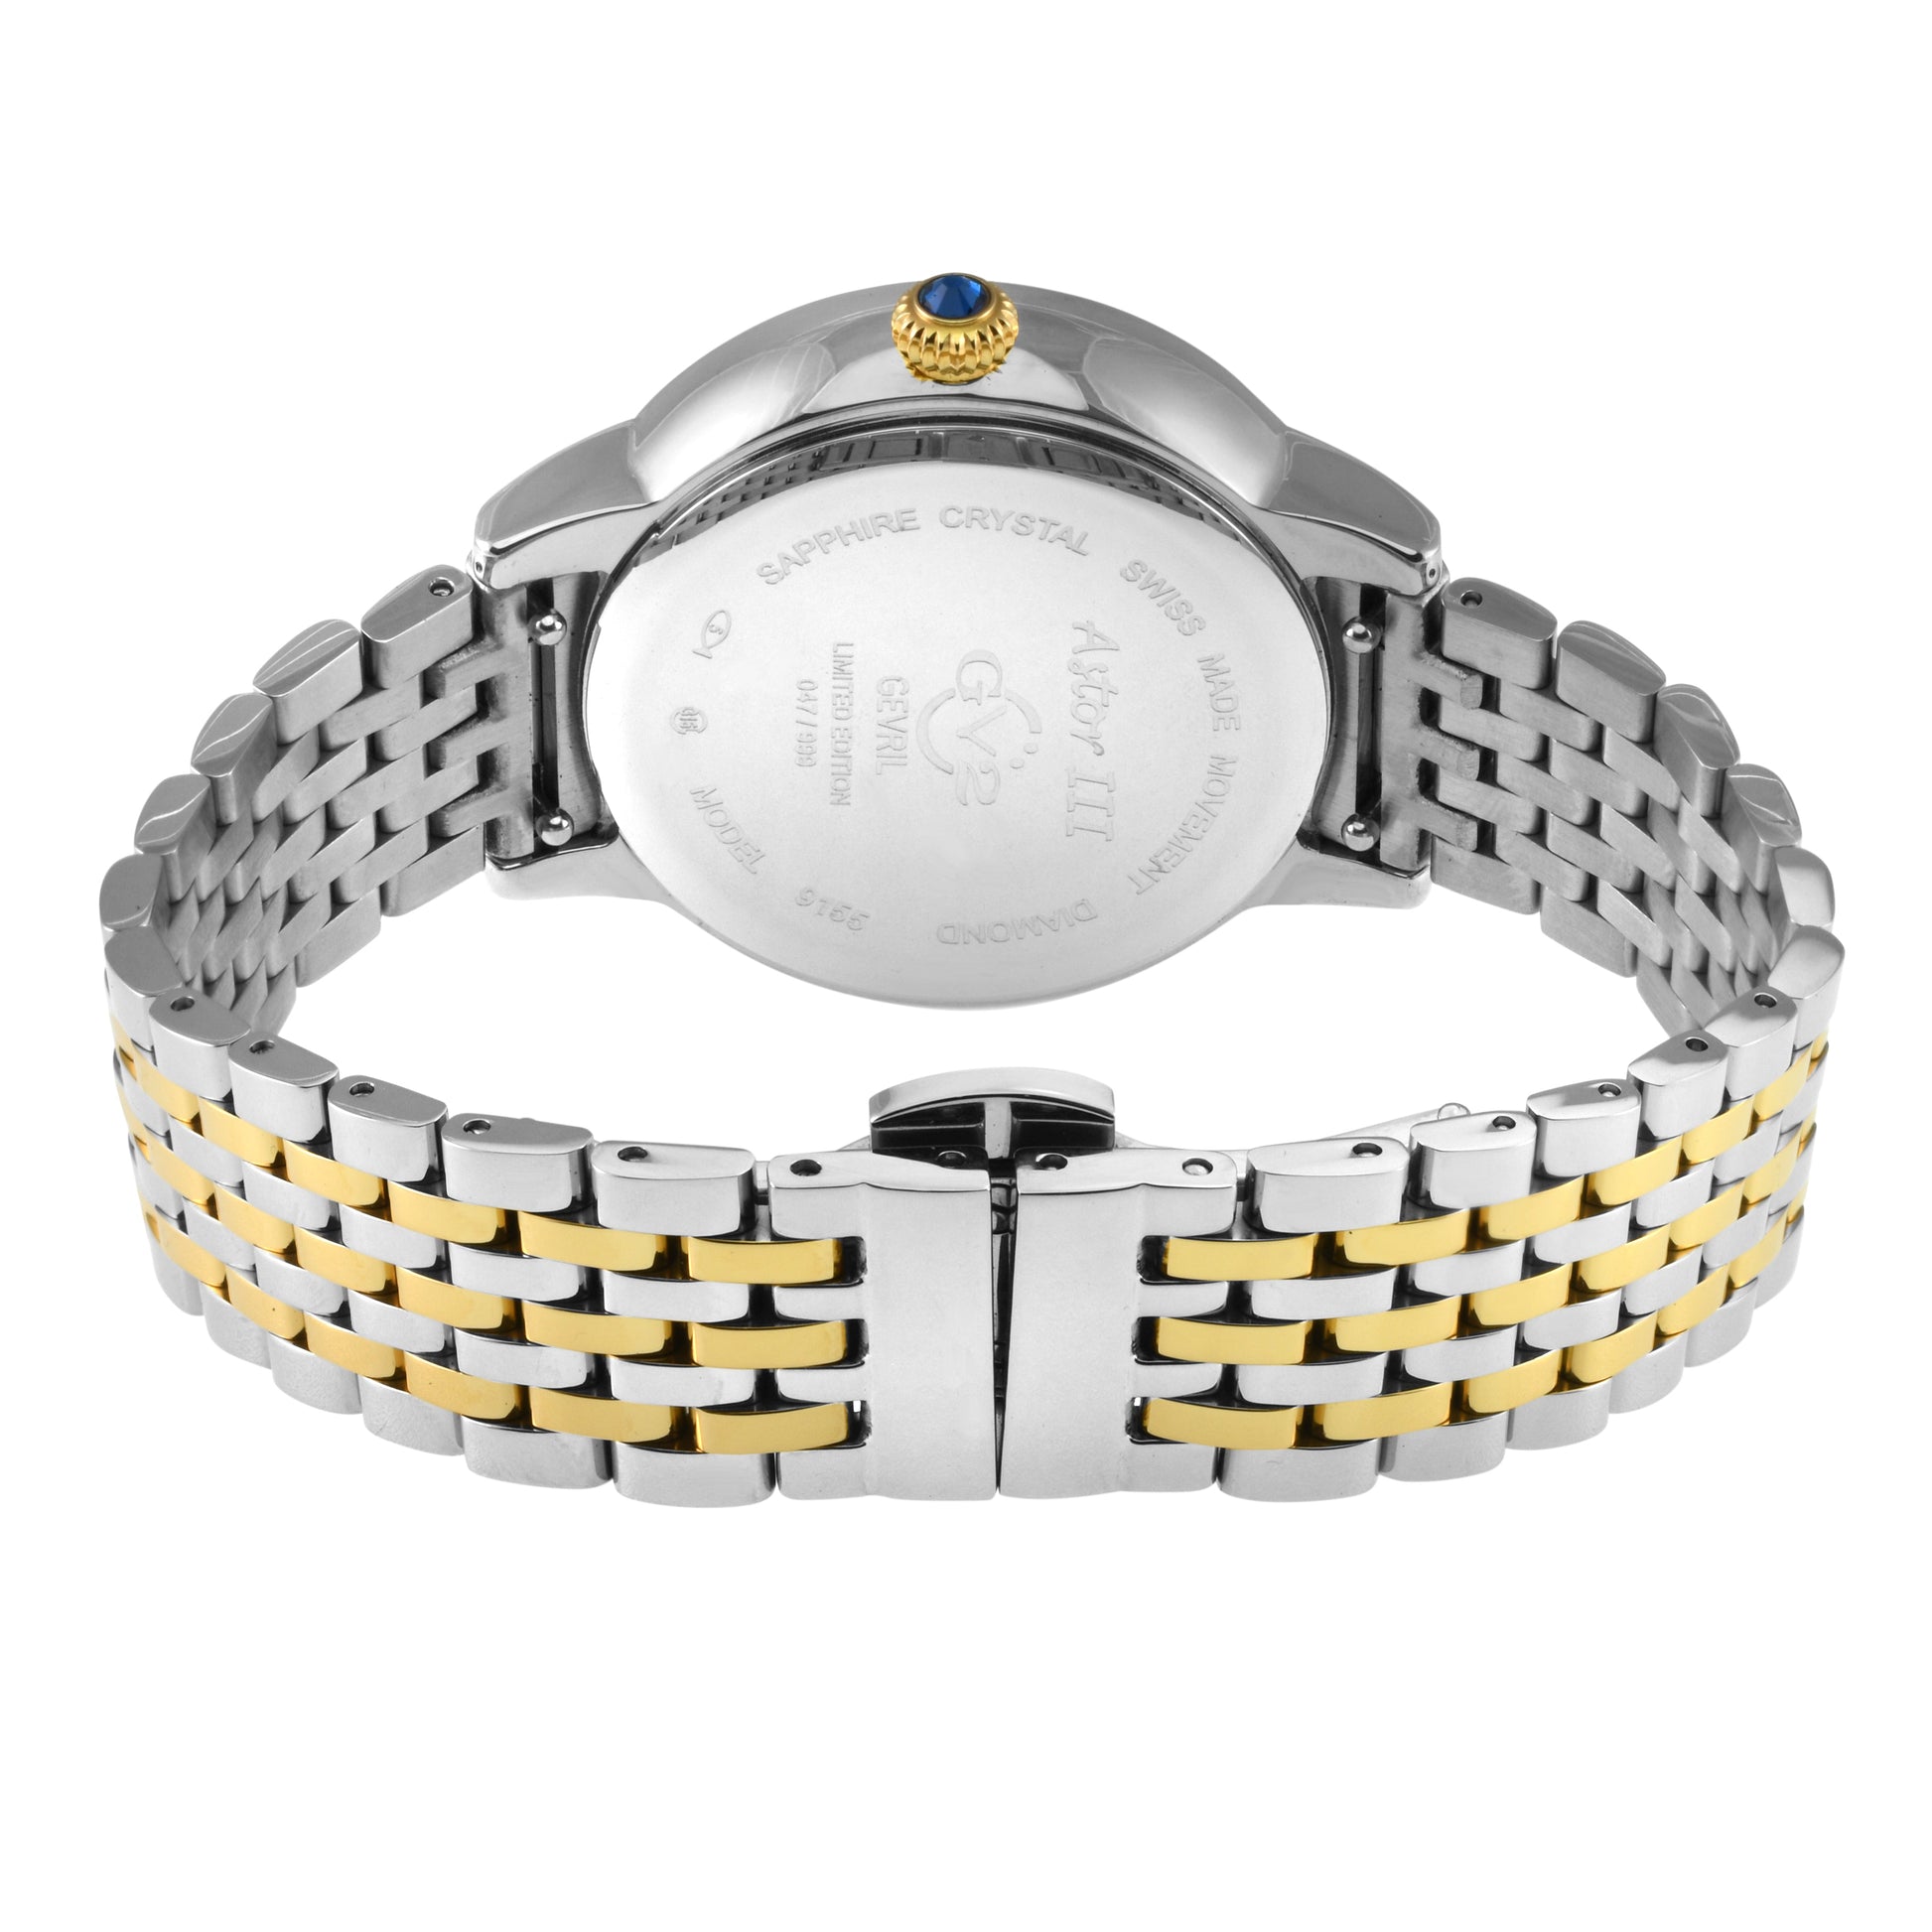 Gevril-Luxury-Swiss-Watches-GV2 Astor III Diamond-9155B